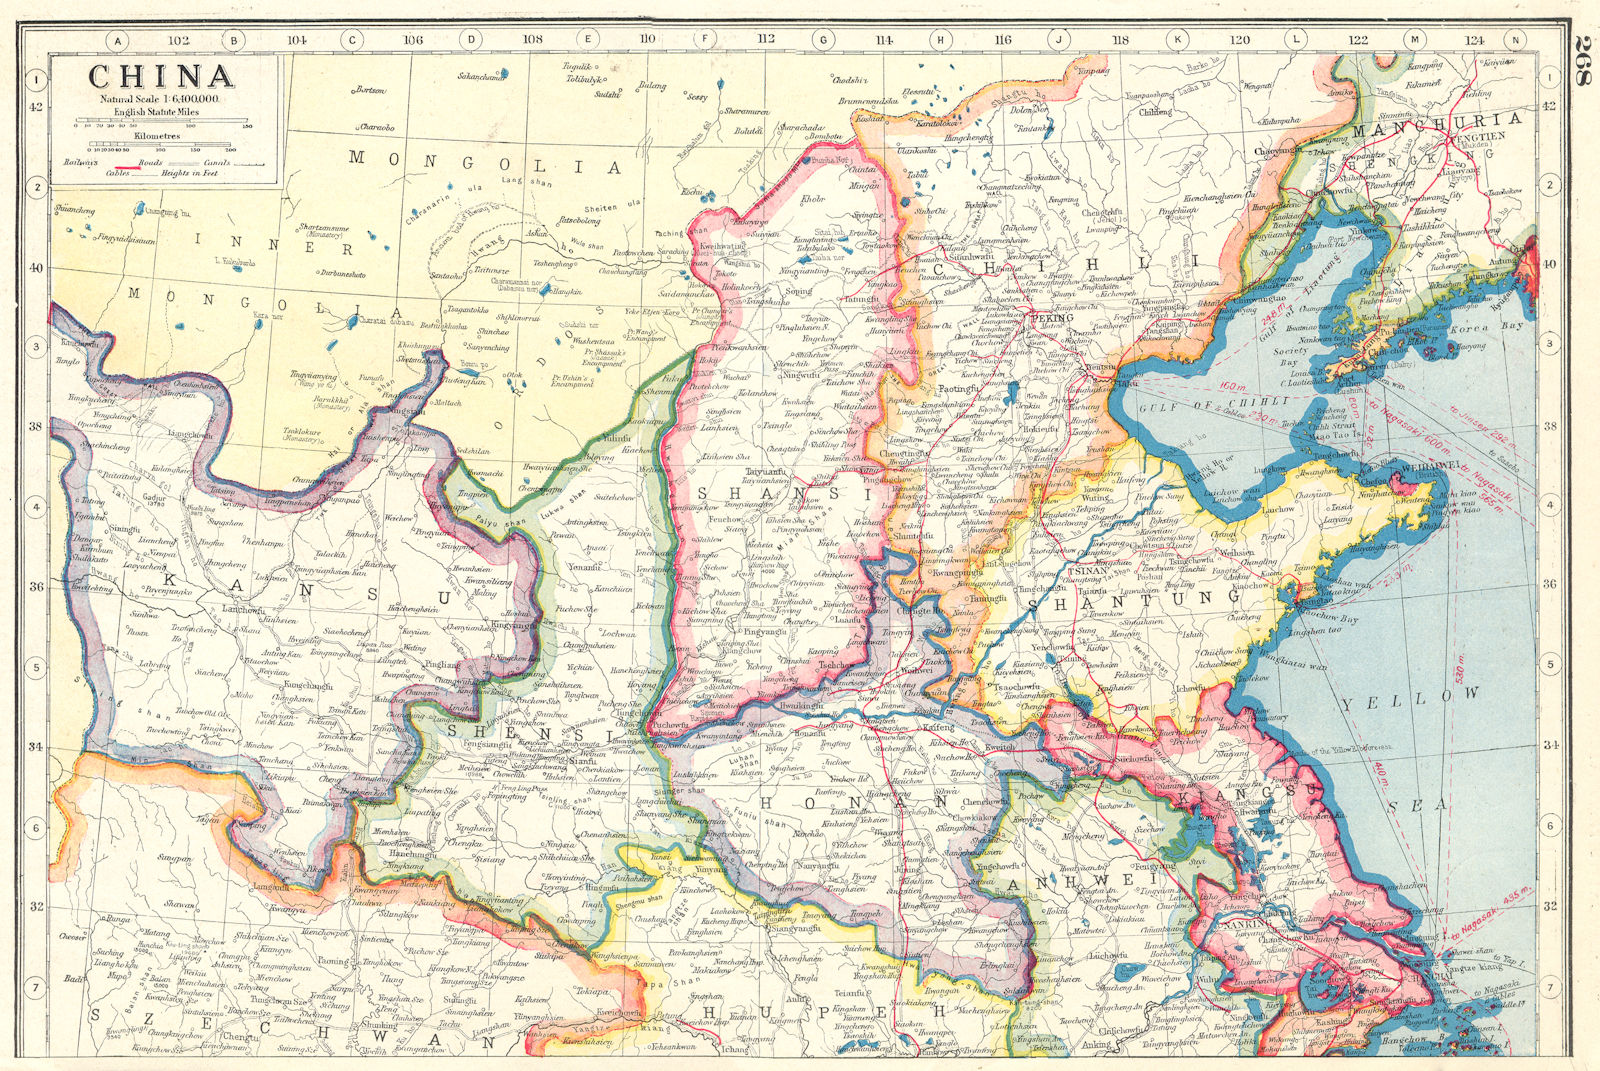 NORTH CHINA. Chihli Kiangsu Anhwei Honan Shensi Shansi Kansu Manchuria 1920 map